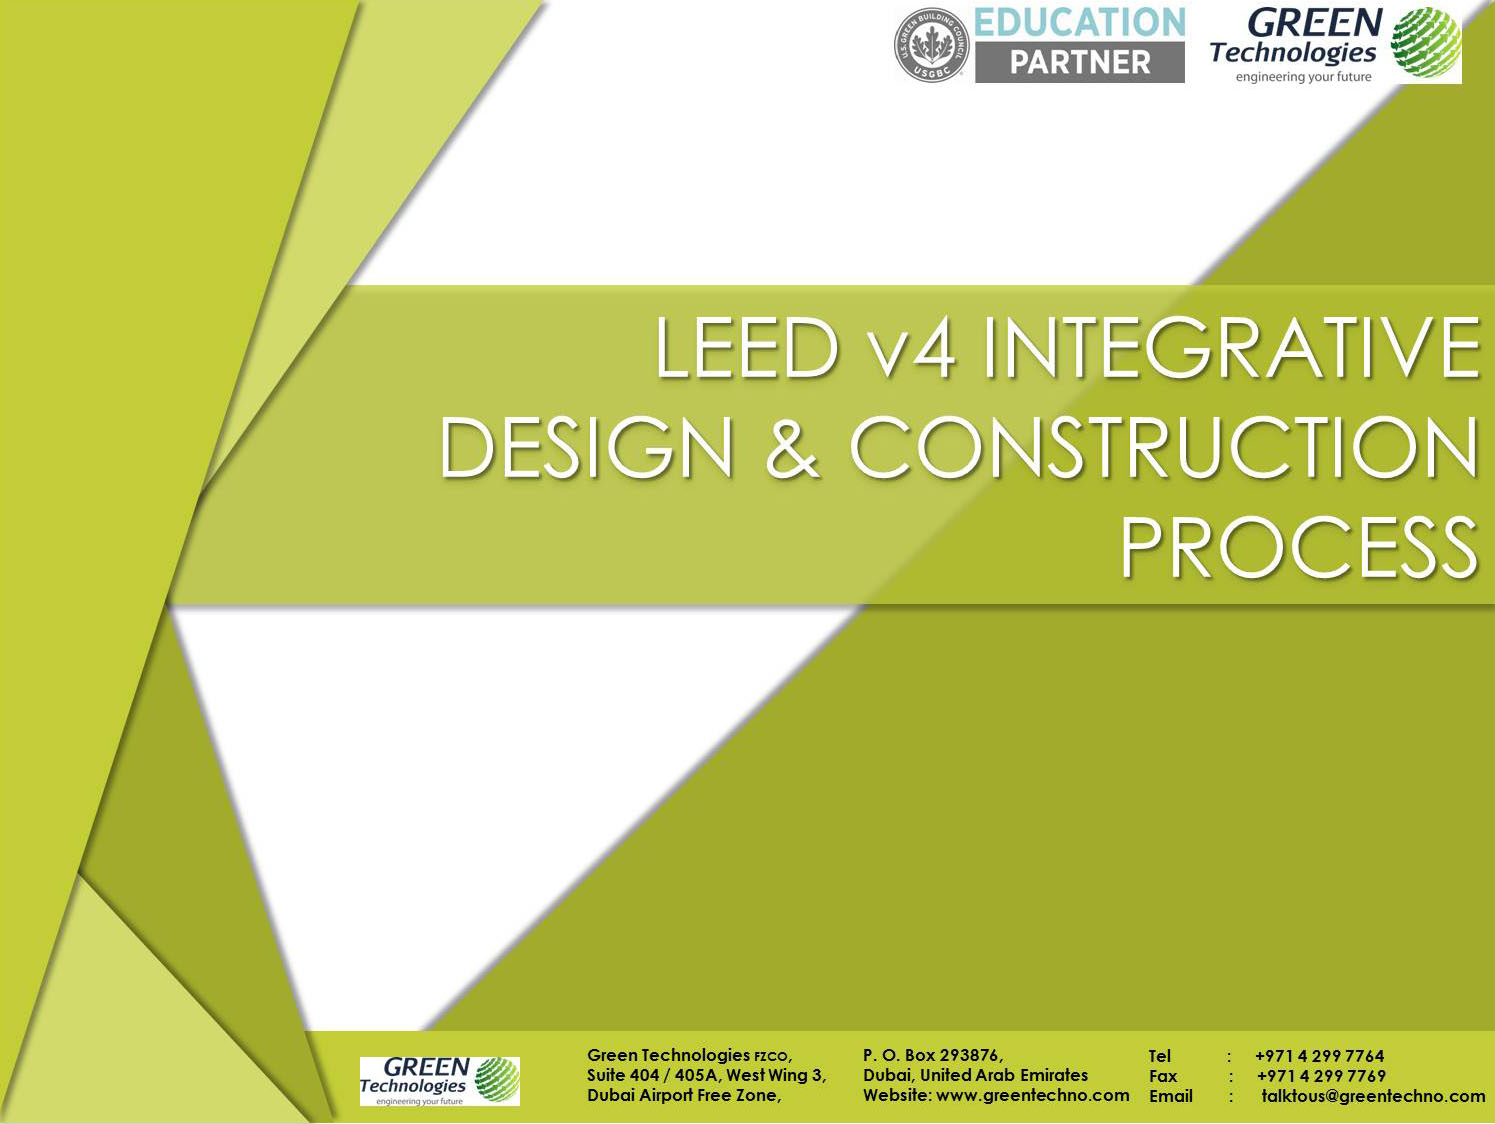 LEED v4 Integrative Design & Construction